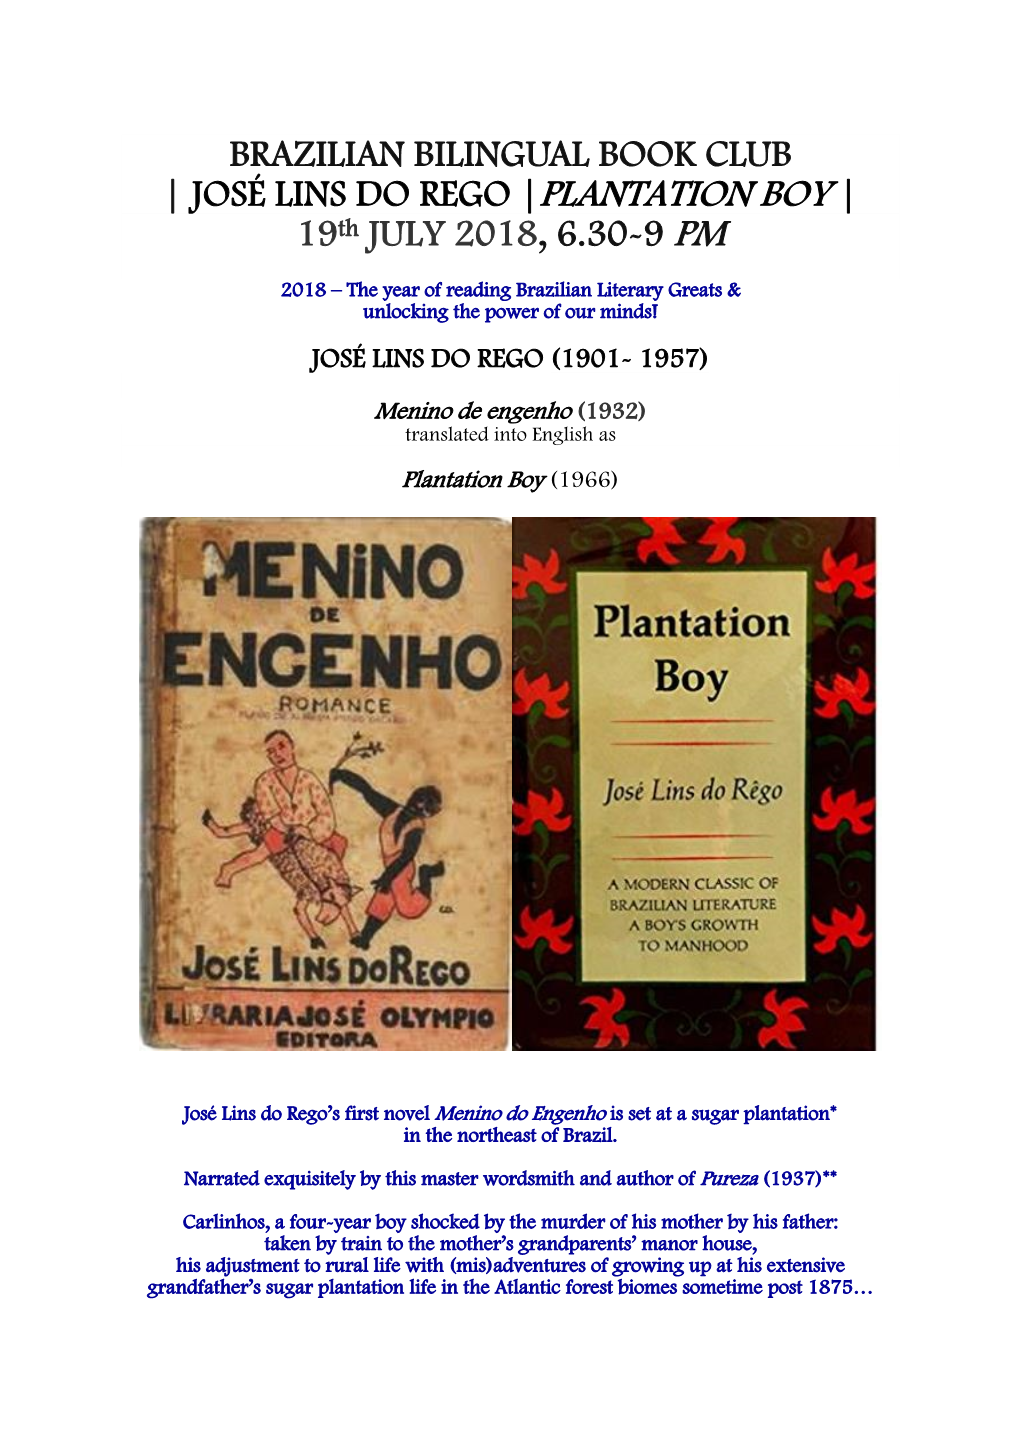 JOSÉ LINS DO REGO |PLANTATION BOY | 19Th JULY 2018, 6.30-9 PM